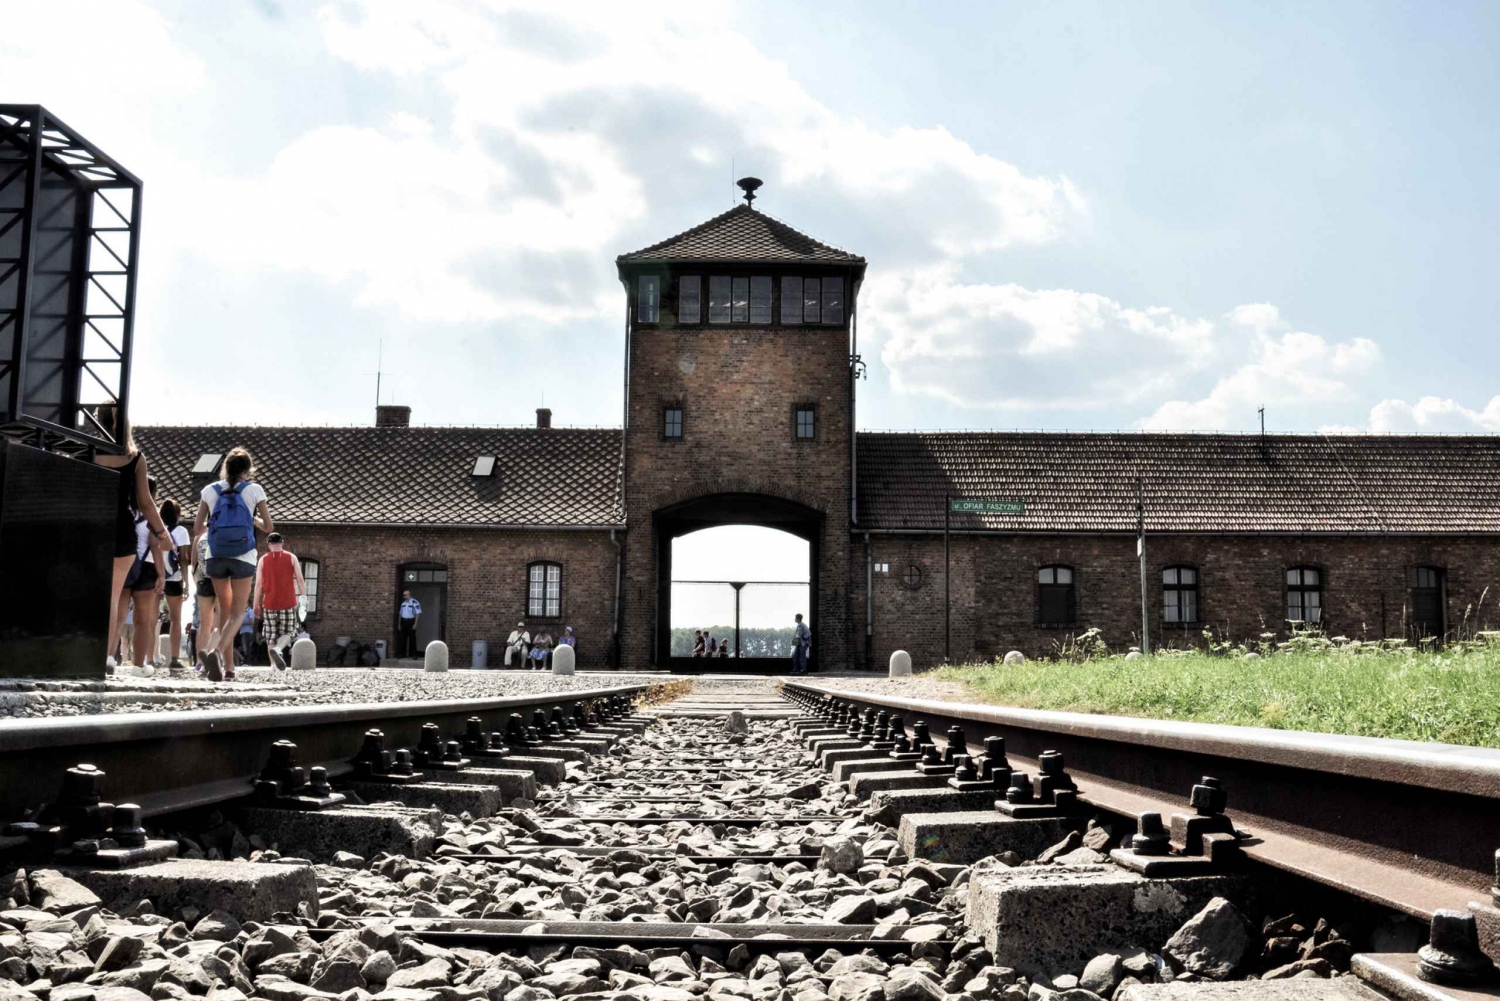 Krakow: Auschwitz-Birkenau Guided Tour Pickup/Lunch Options